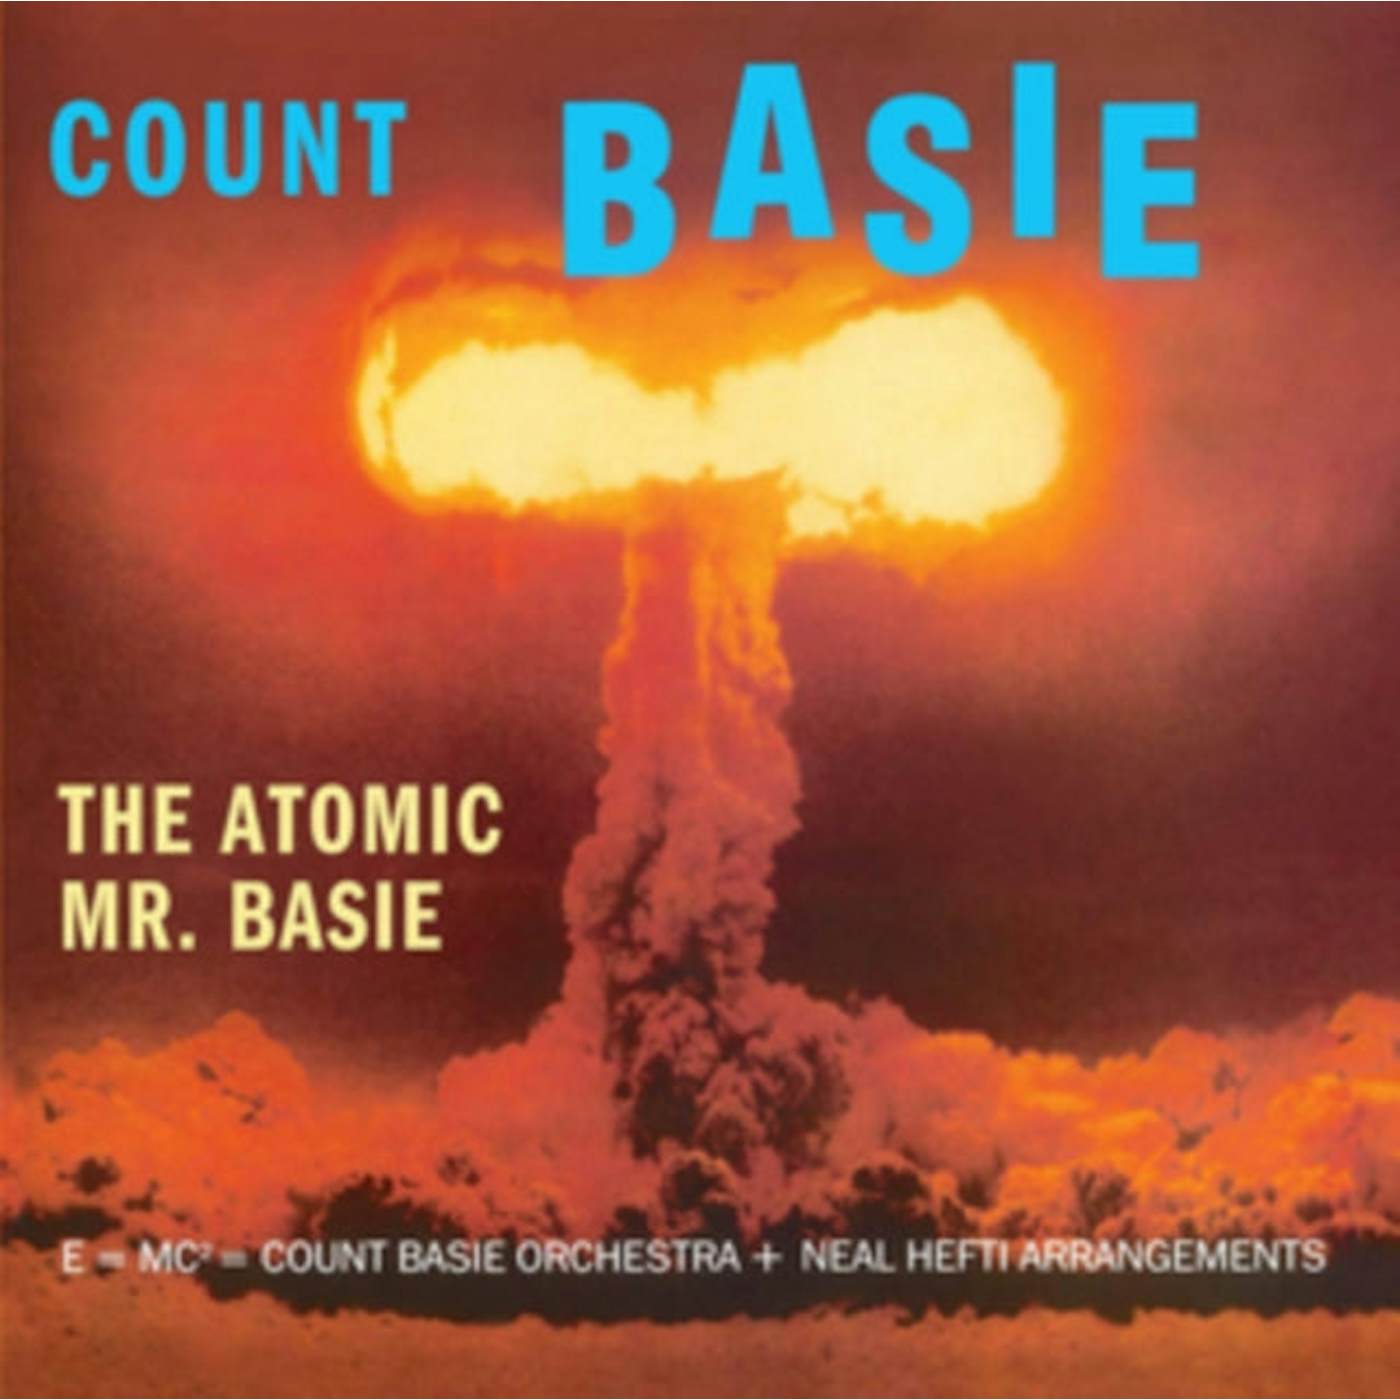 Count Basie LP Vinyl Record - The Atomic Mr. Basie (Limited Orange Vinyl)